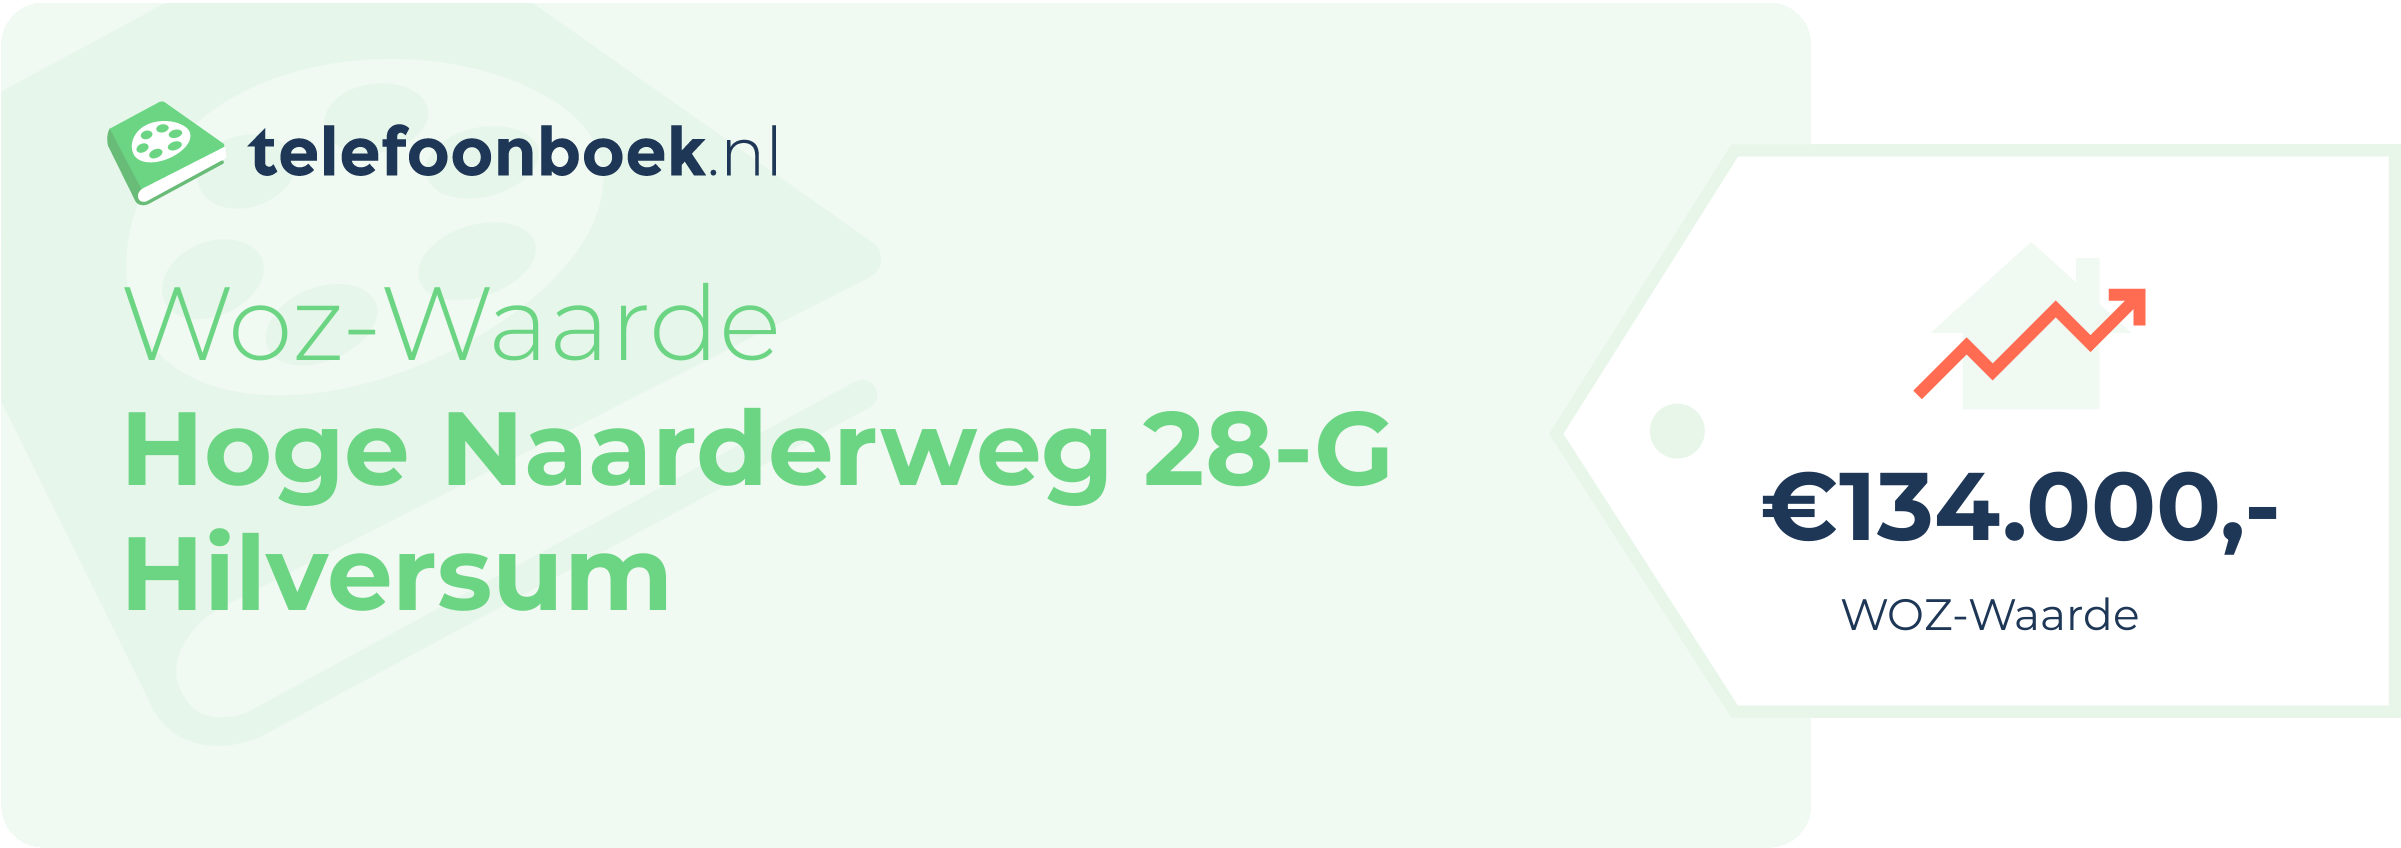 WOZ-waarde Hoge Naarderweg 28-G Hilversum